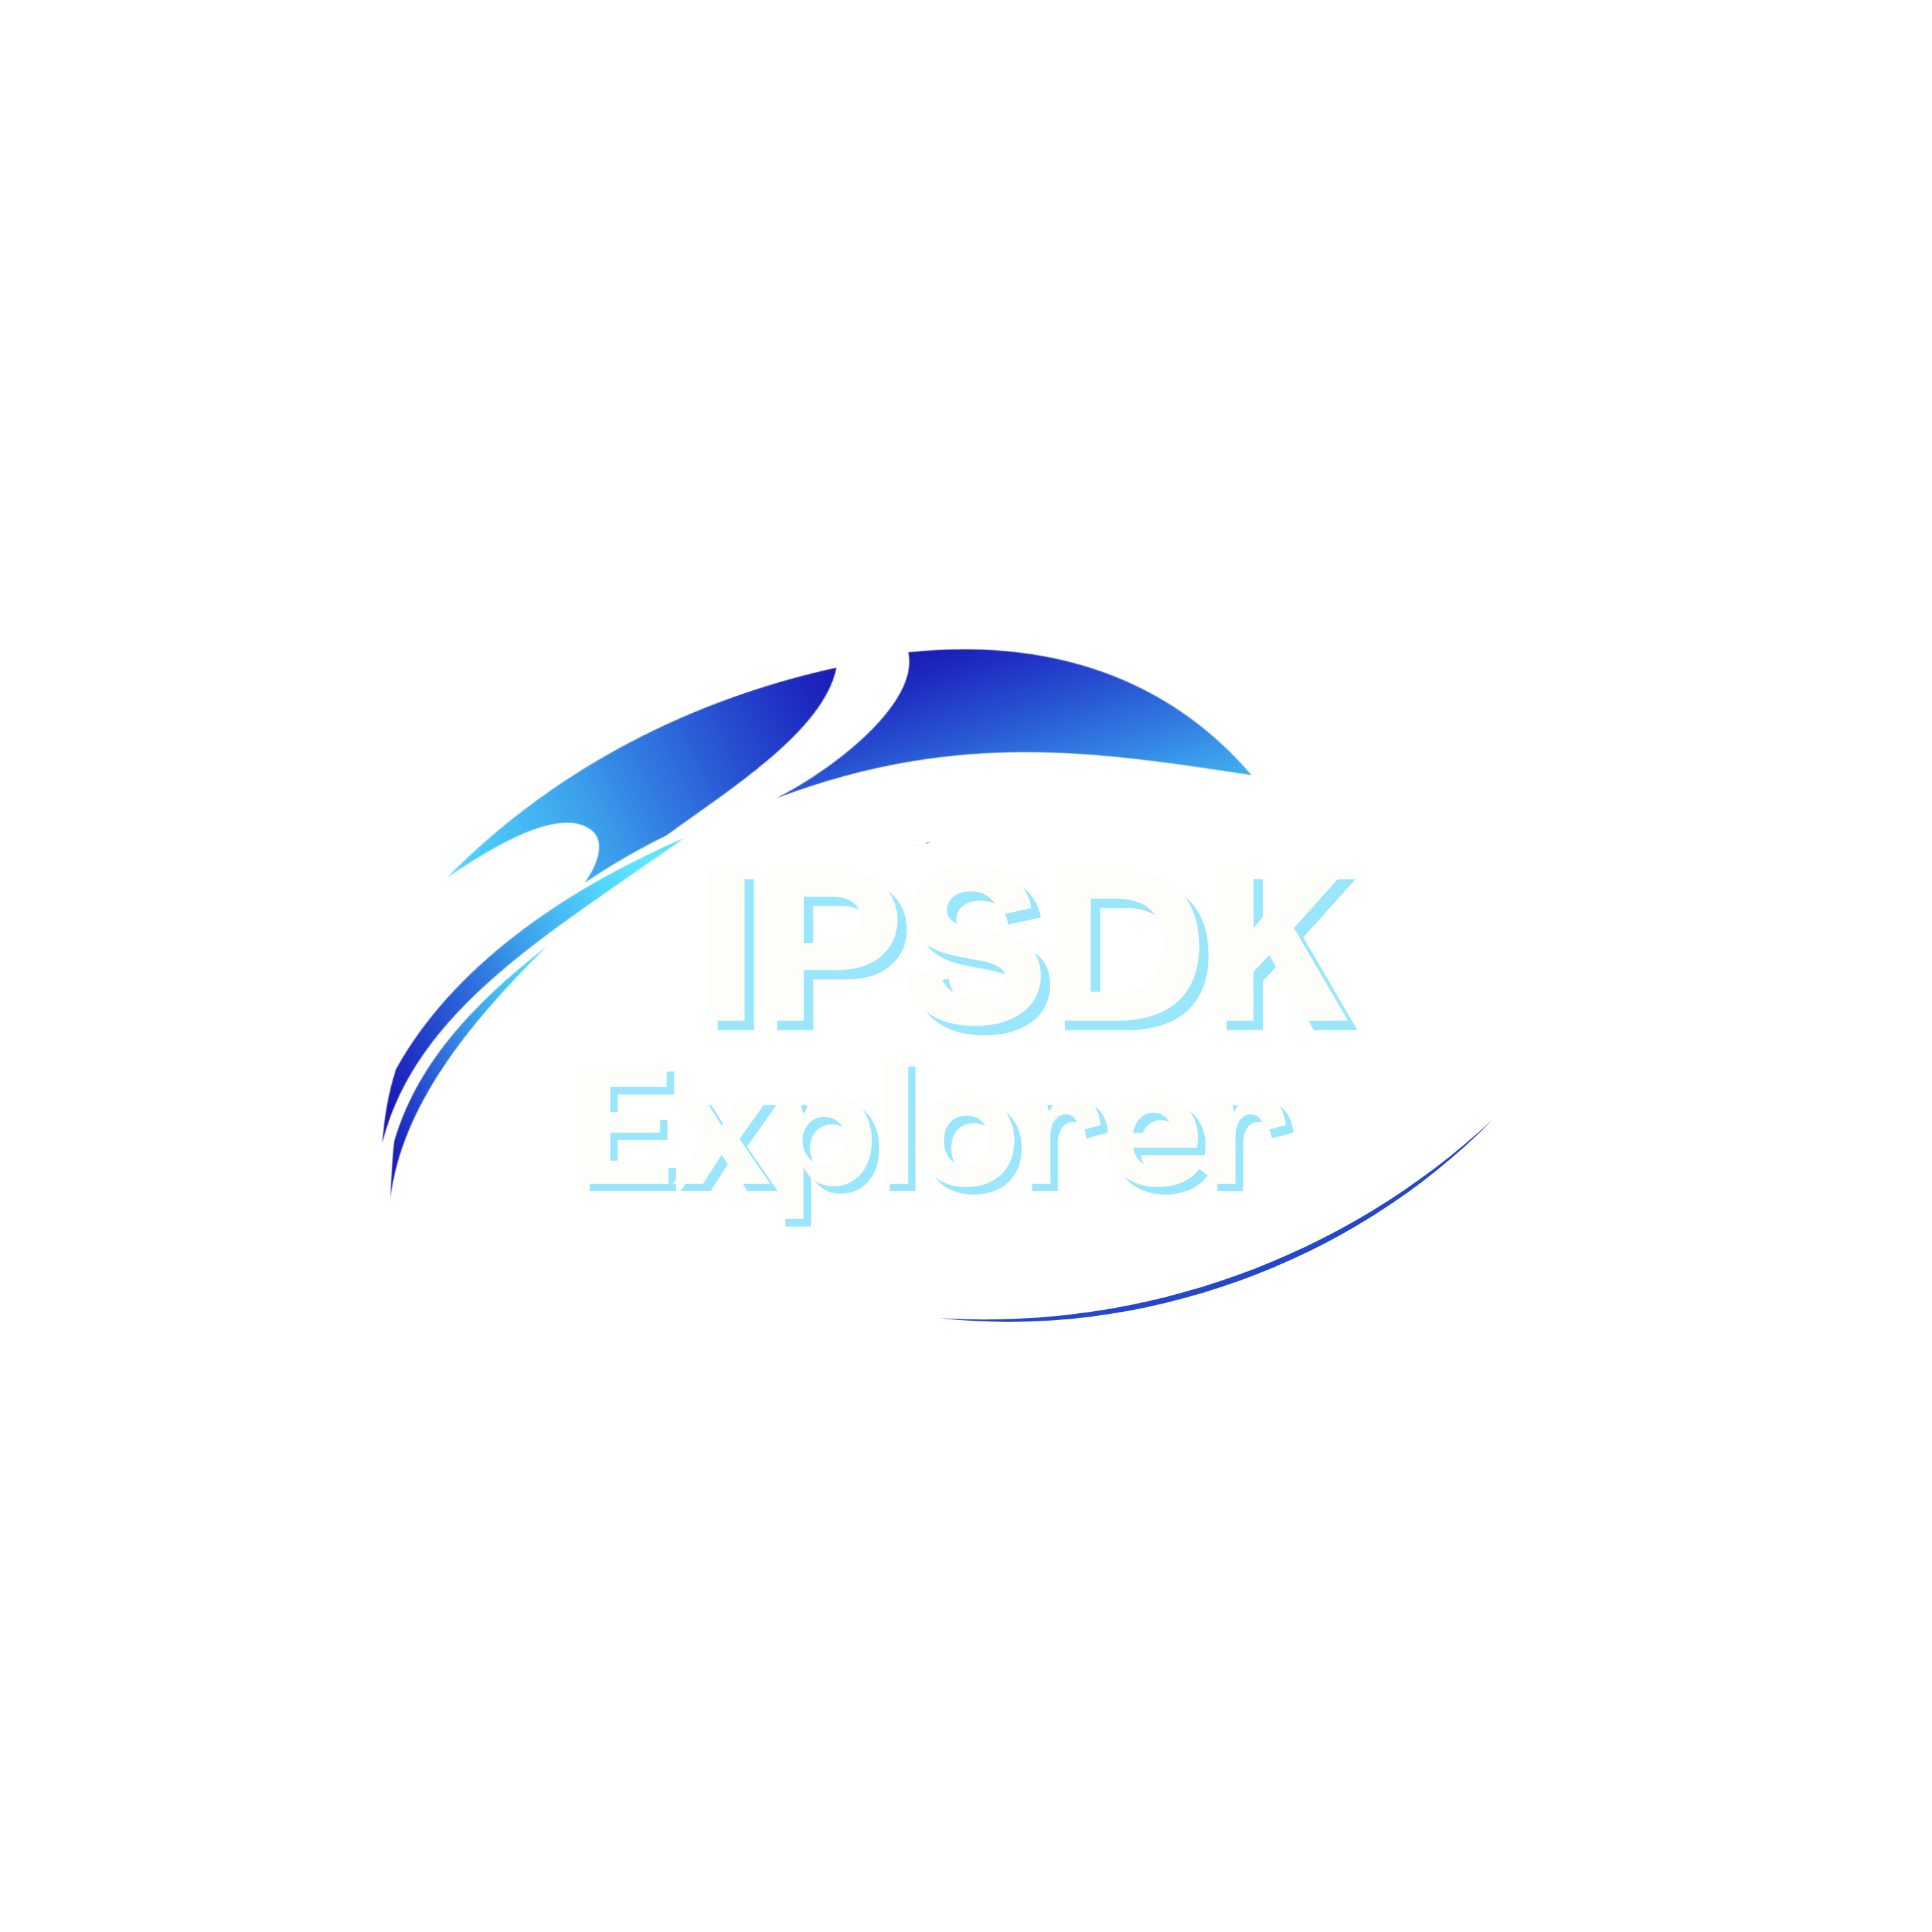 IPSDK Explorer logo